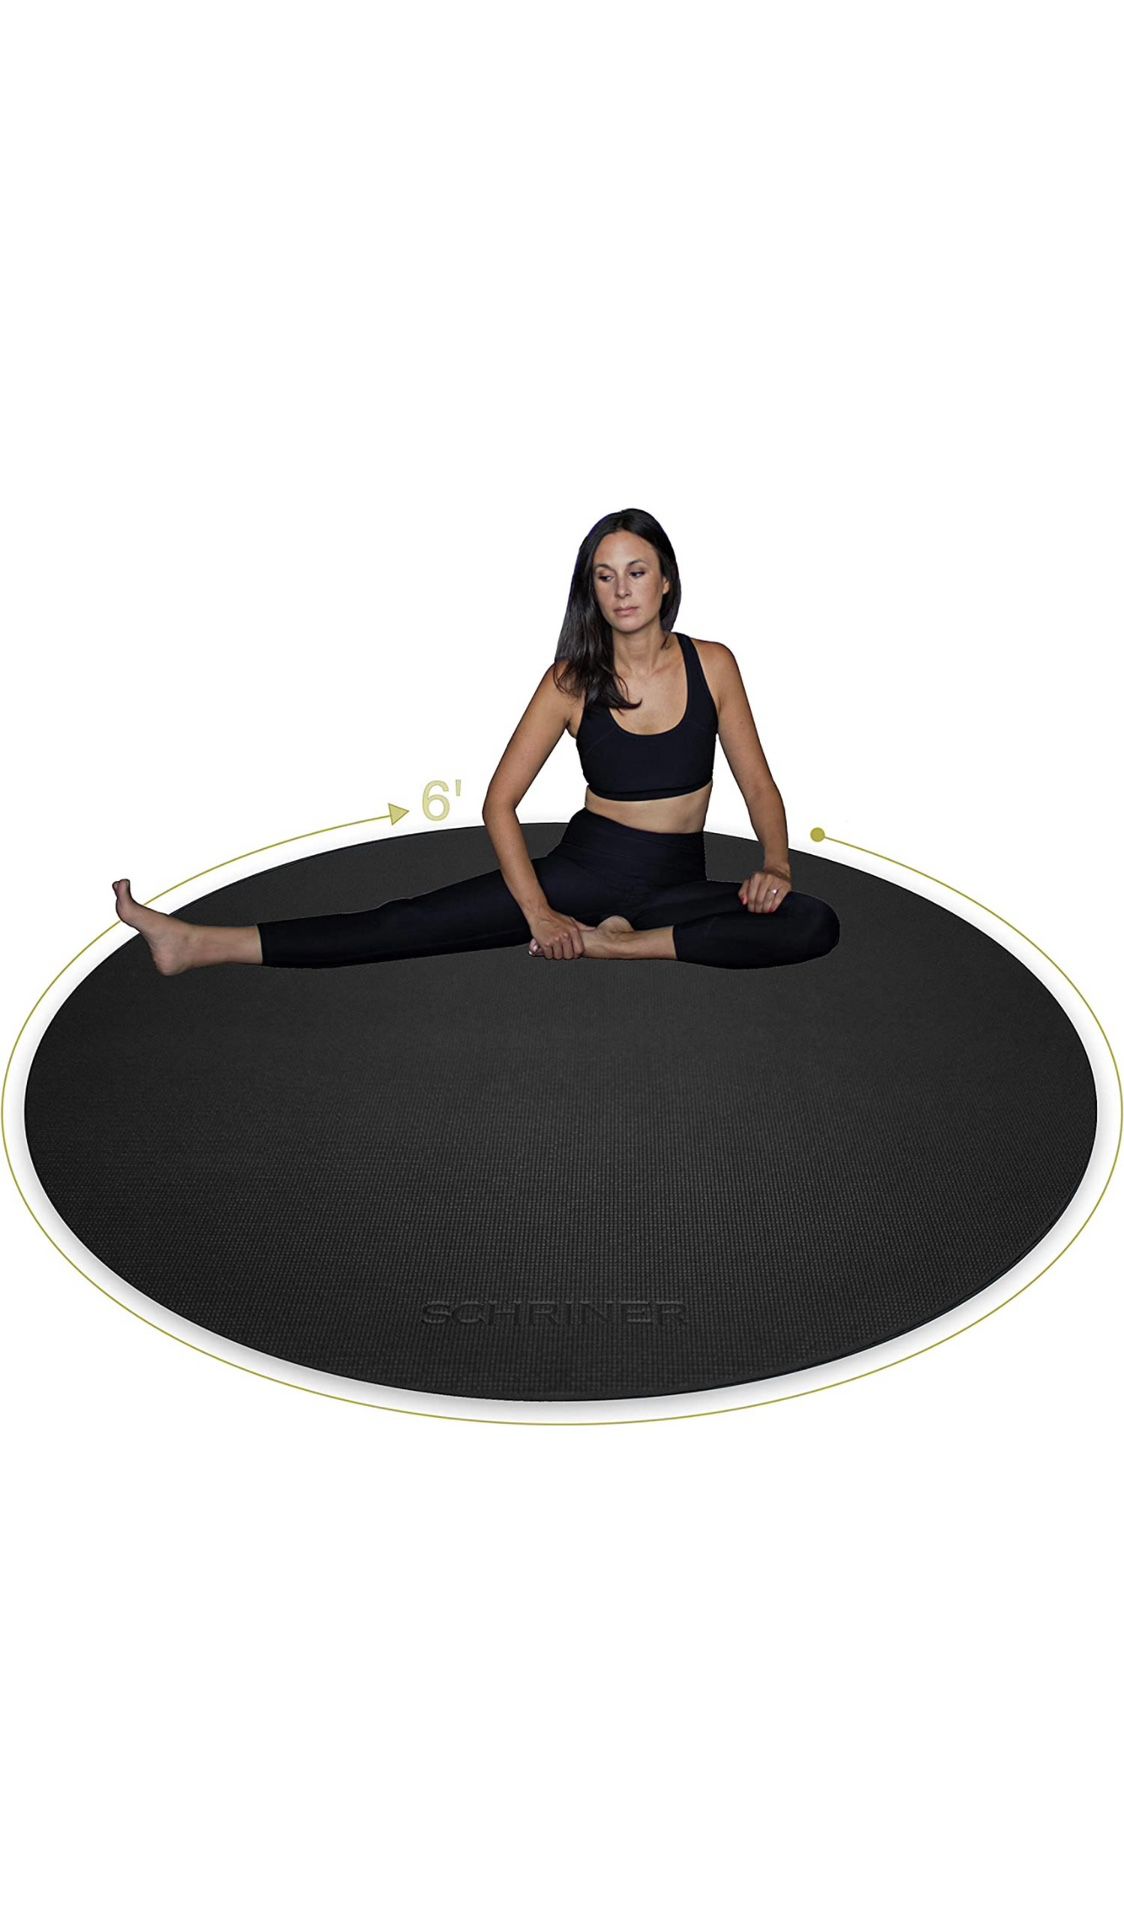 SCHRINER Pro Large Round Yoga Mat 6' x 8mm for Exercise Premium